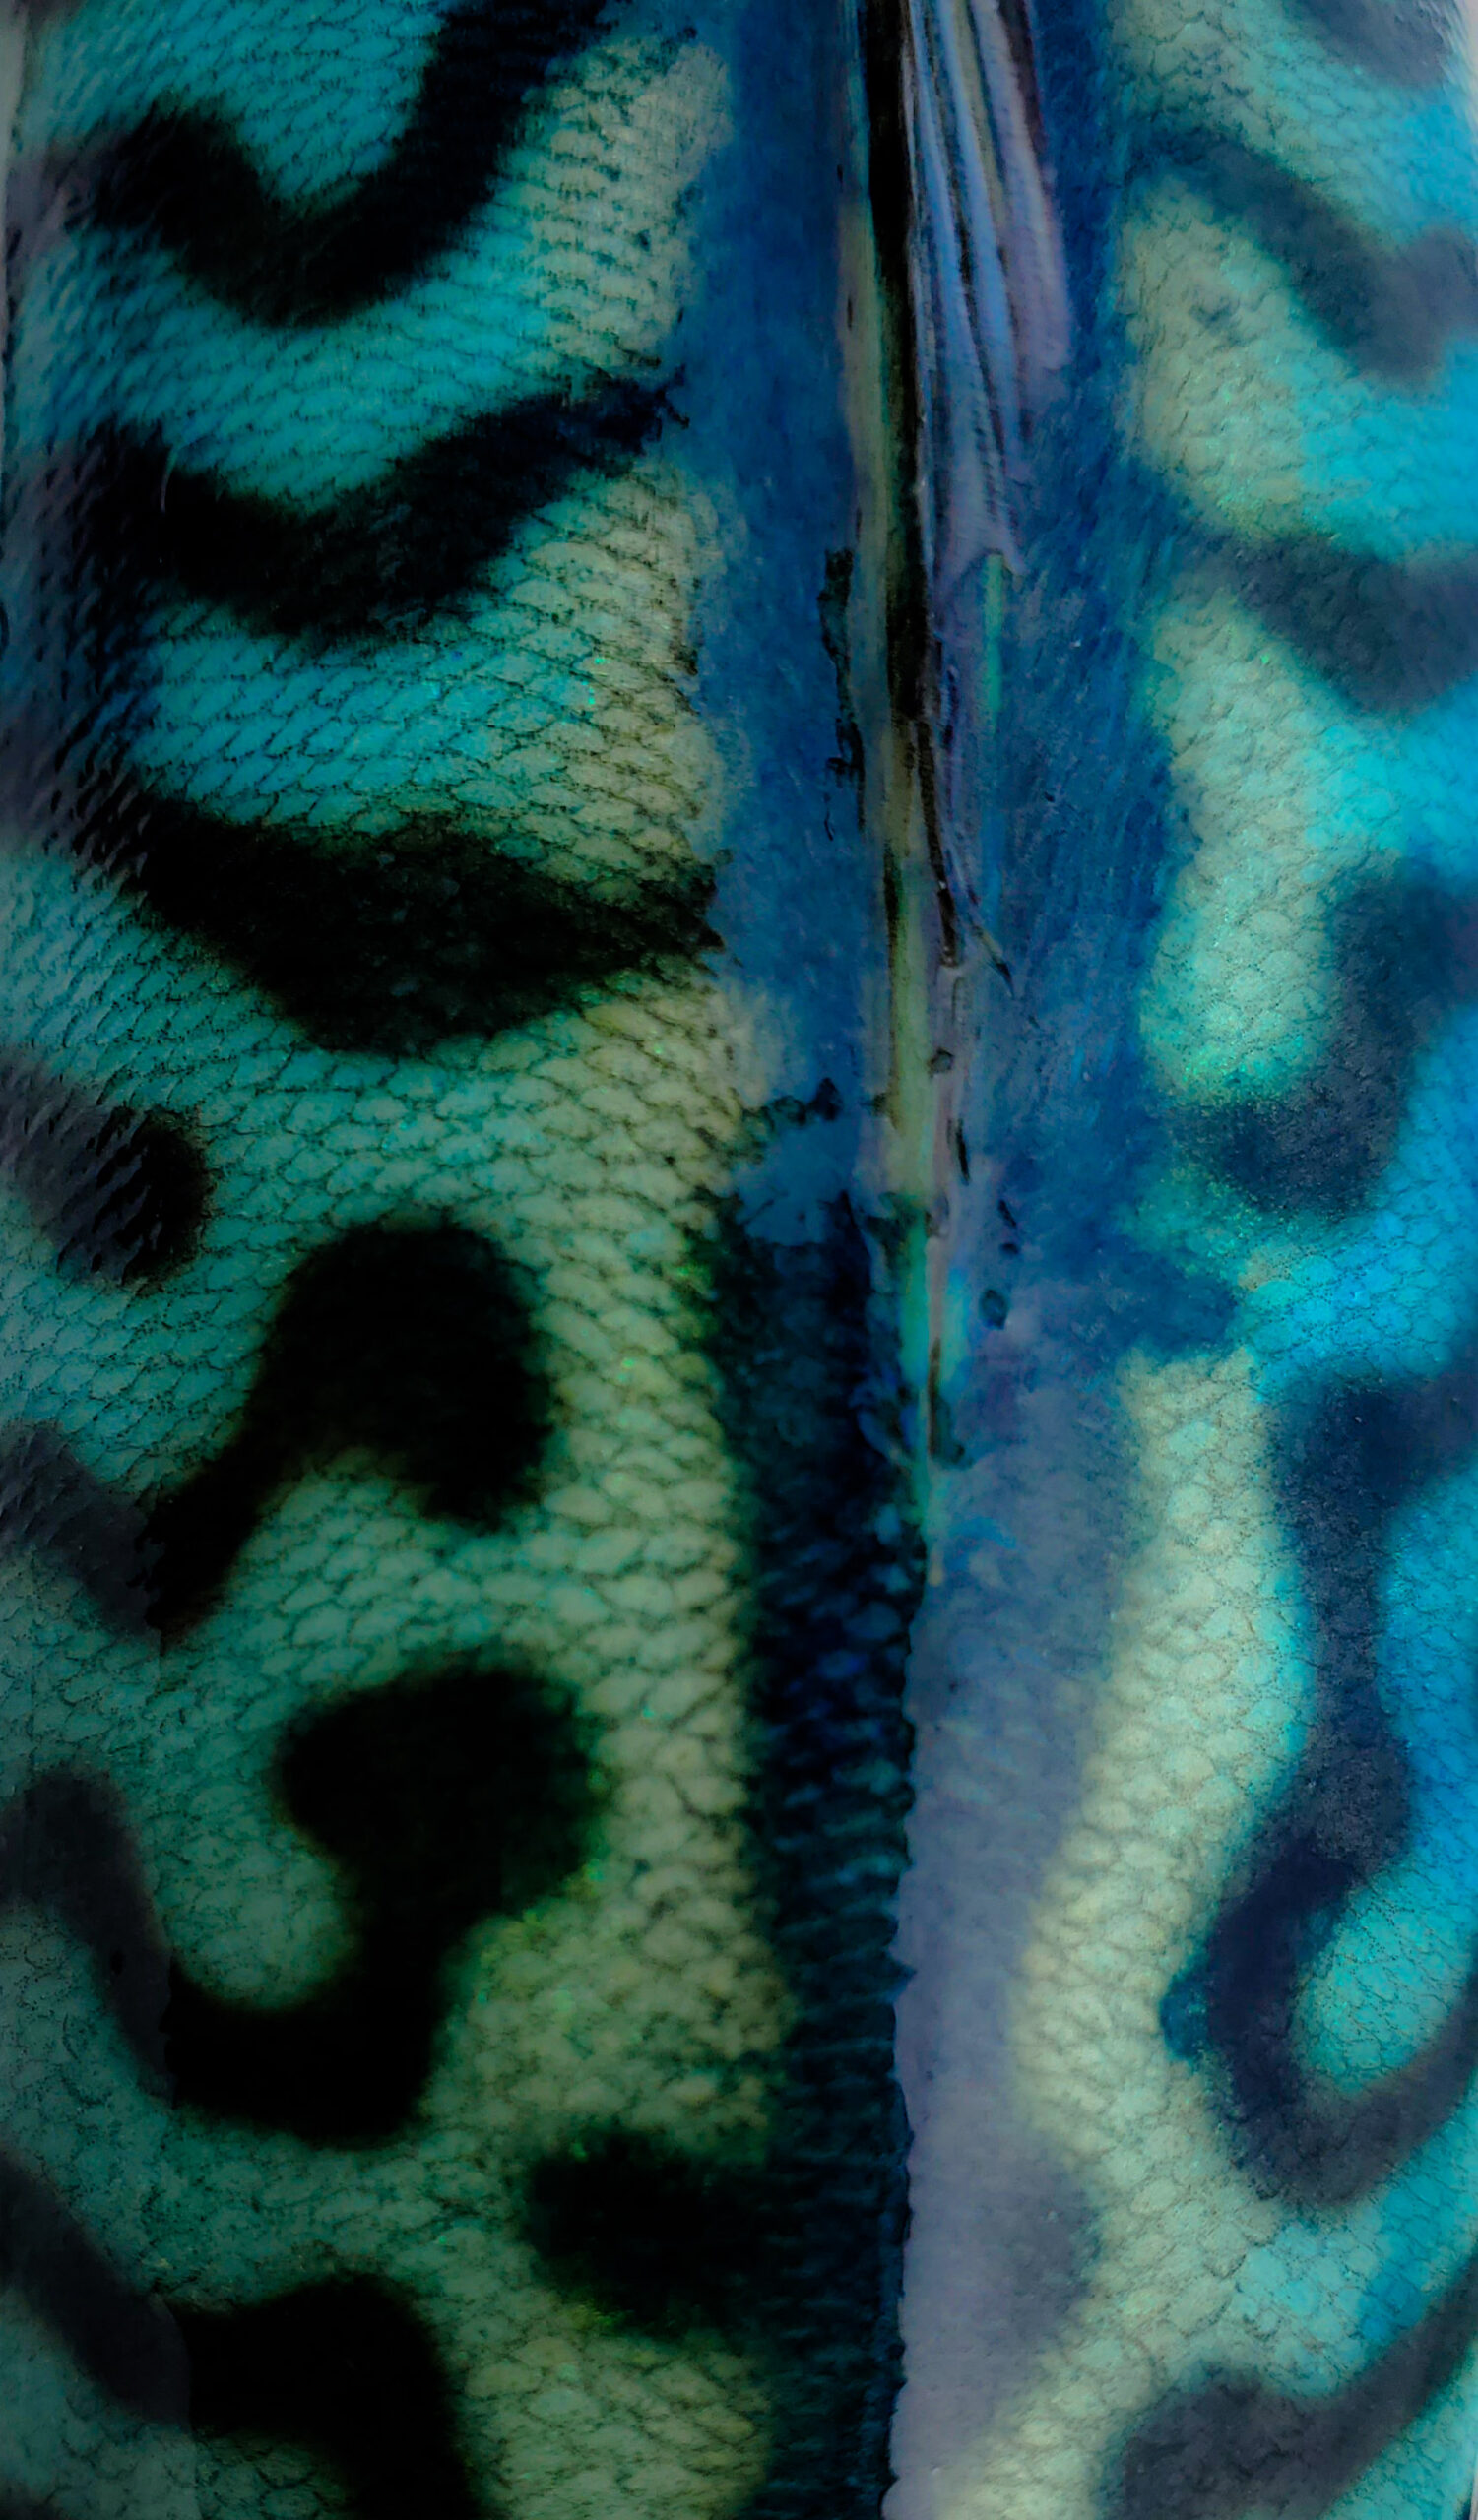 Mackerel, closeup